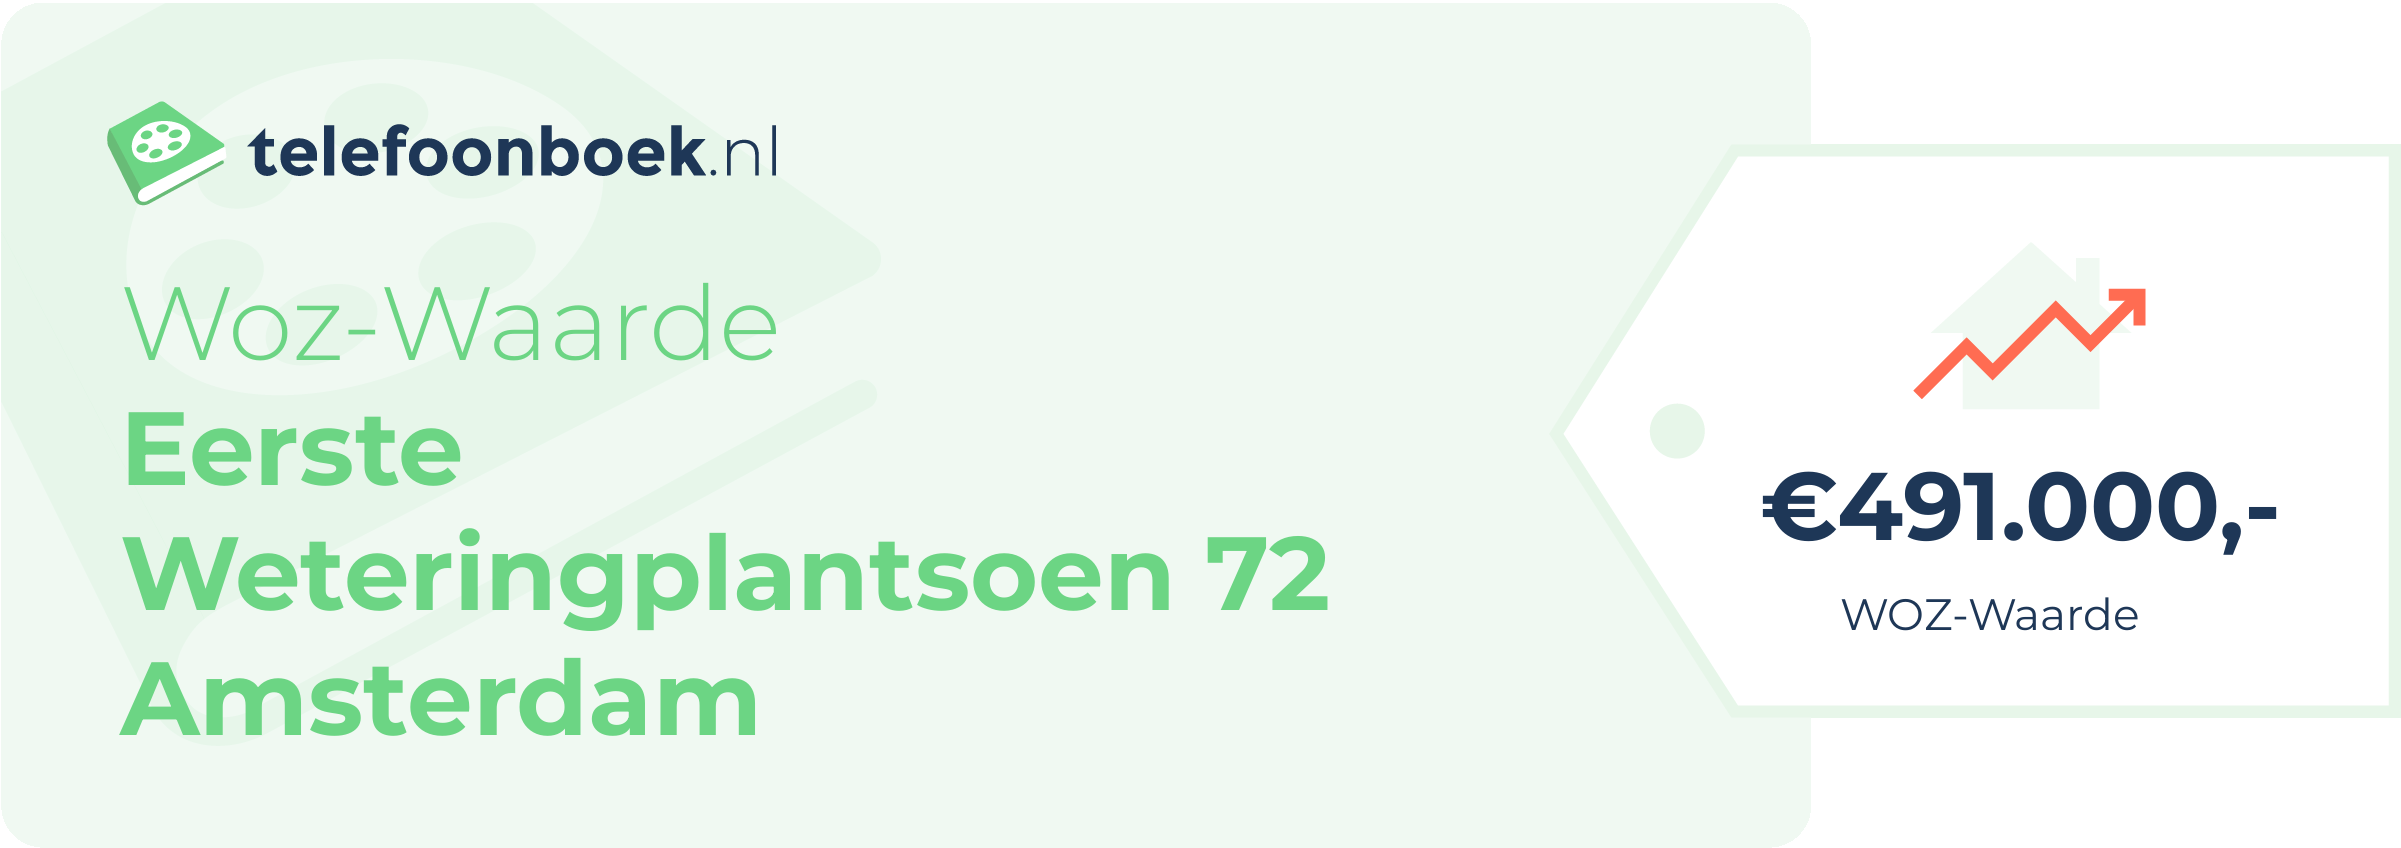 WOZ-waarde Eerste Weteringplantsoen 72 Amsterdam